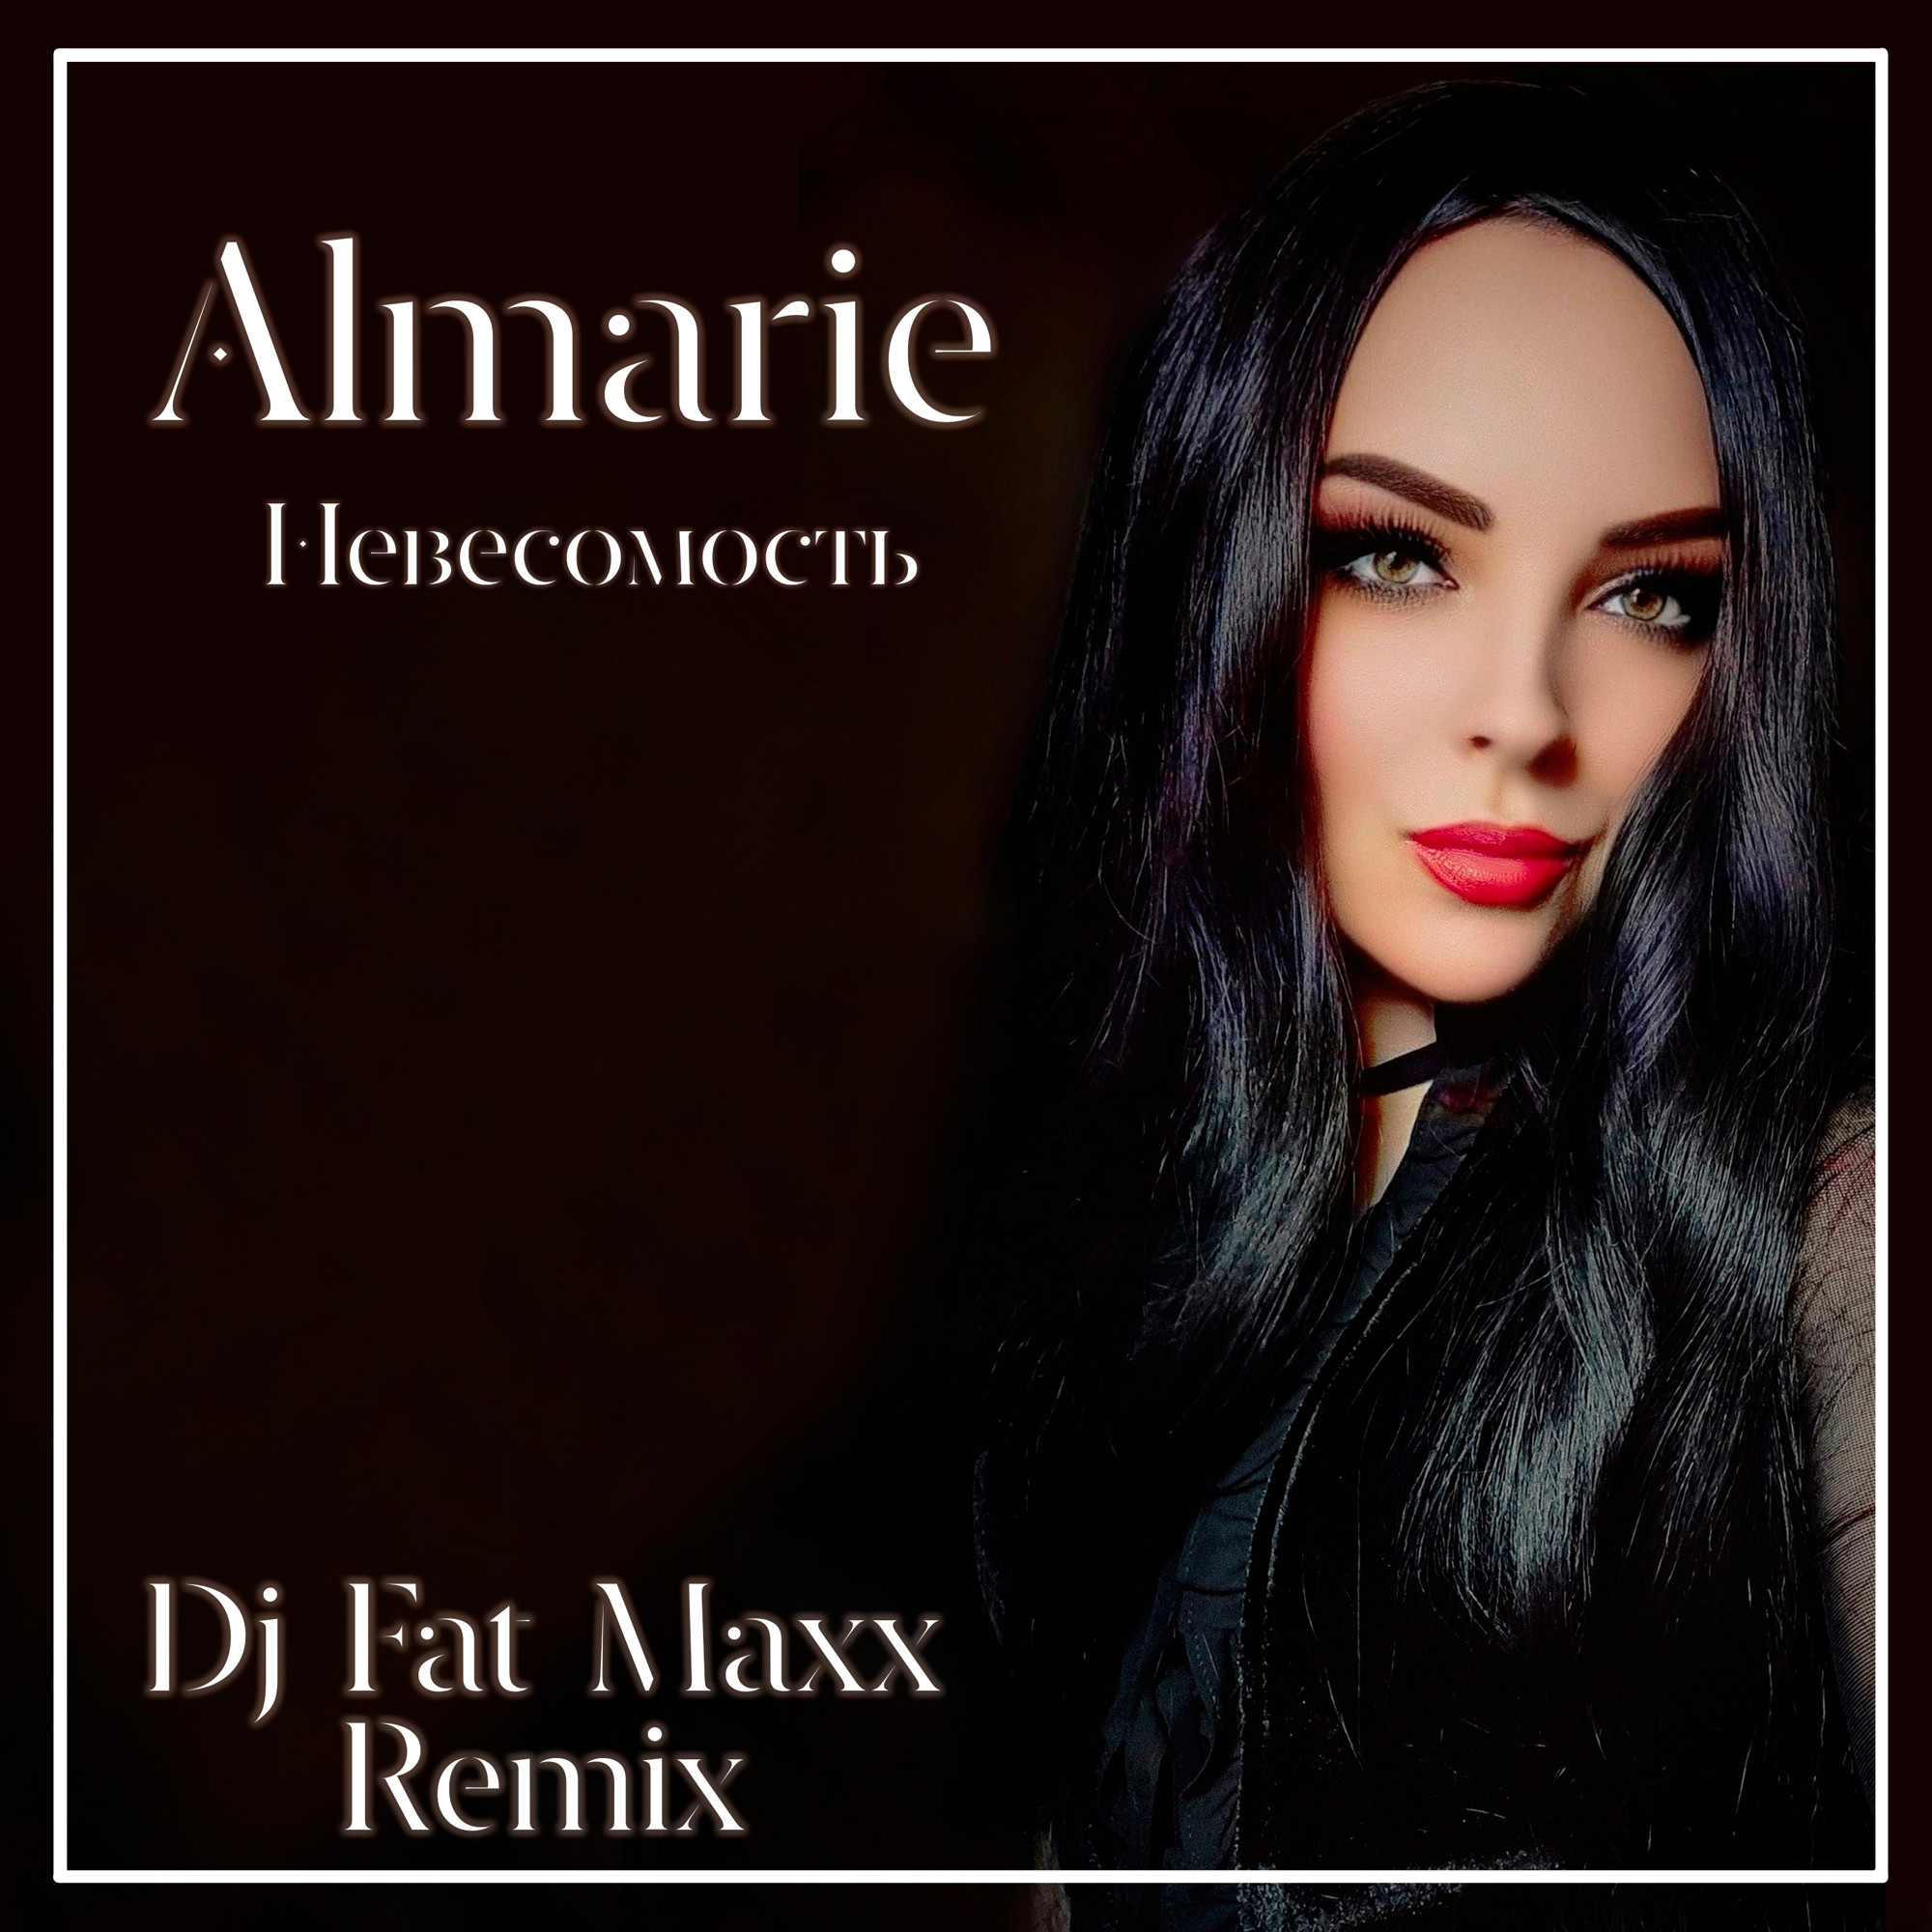 Almarie. Дым бомбим fat maxx remix